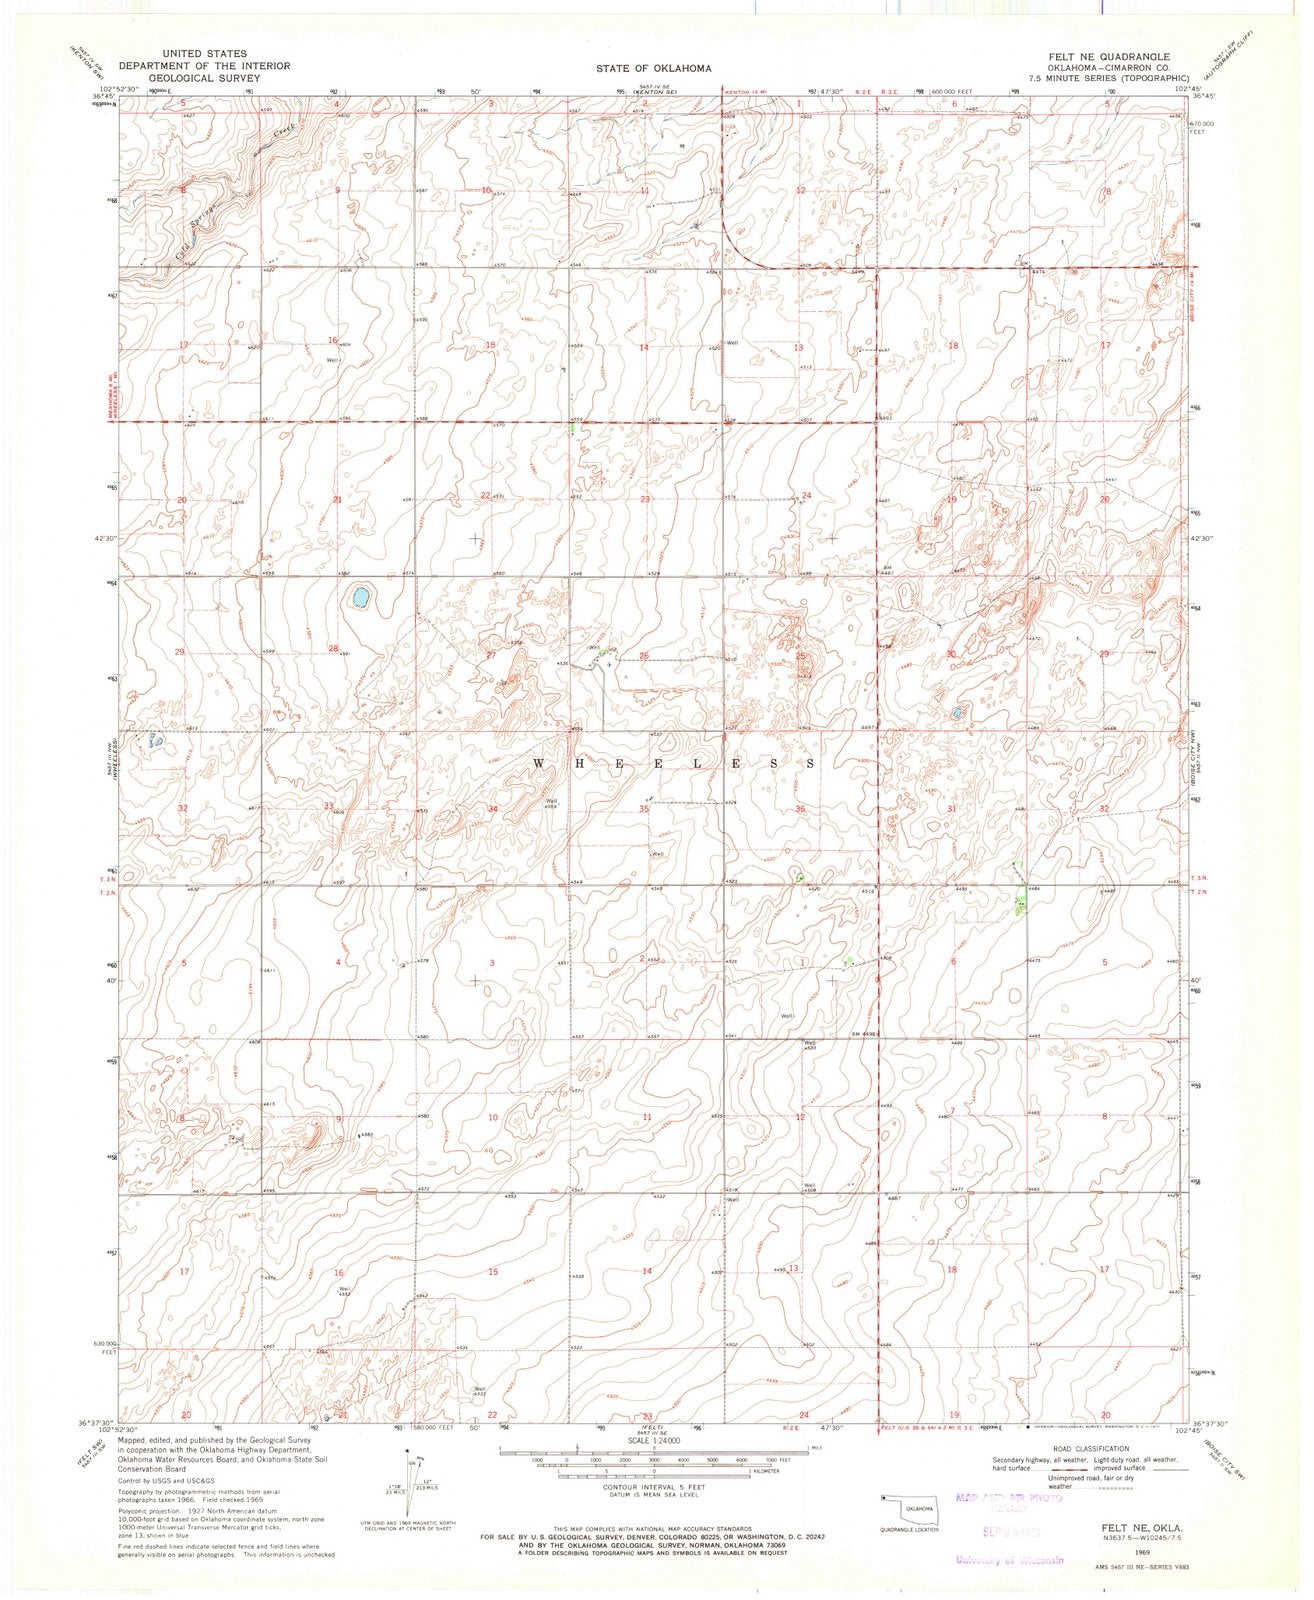 1969 Felt, OK - Oklahoma - USGS Topographic Map v2